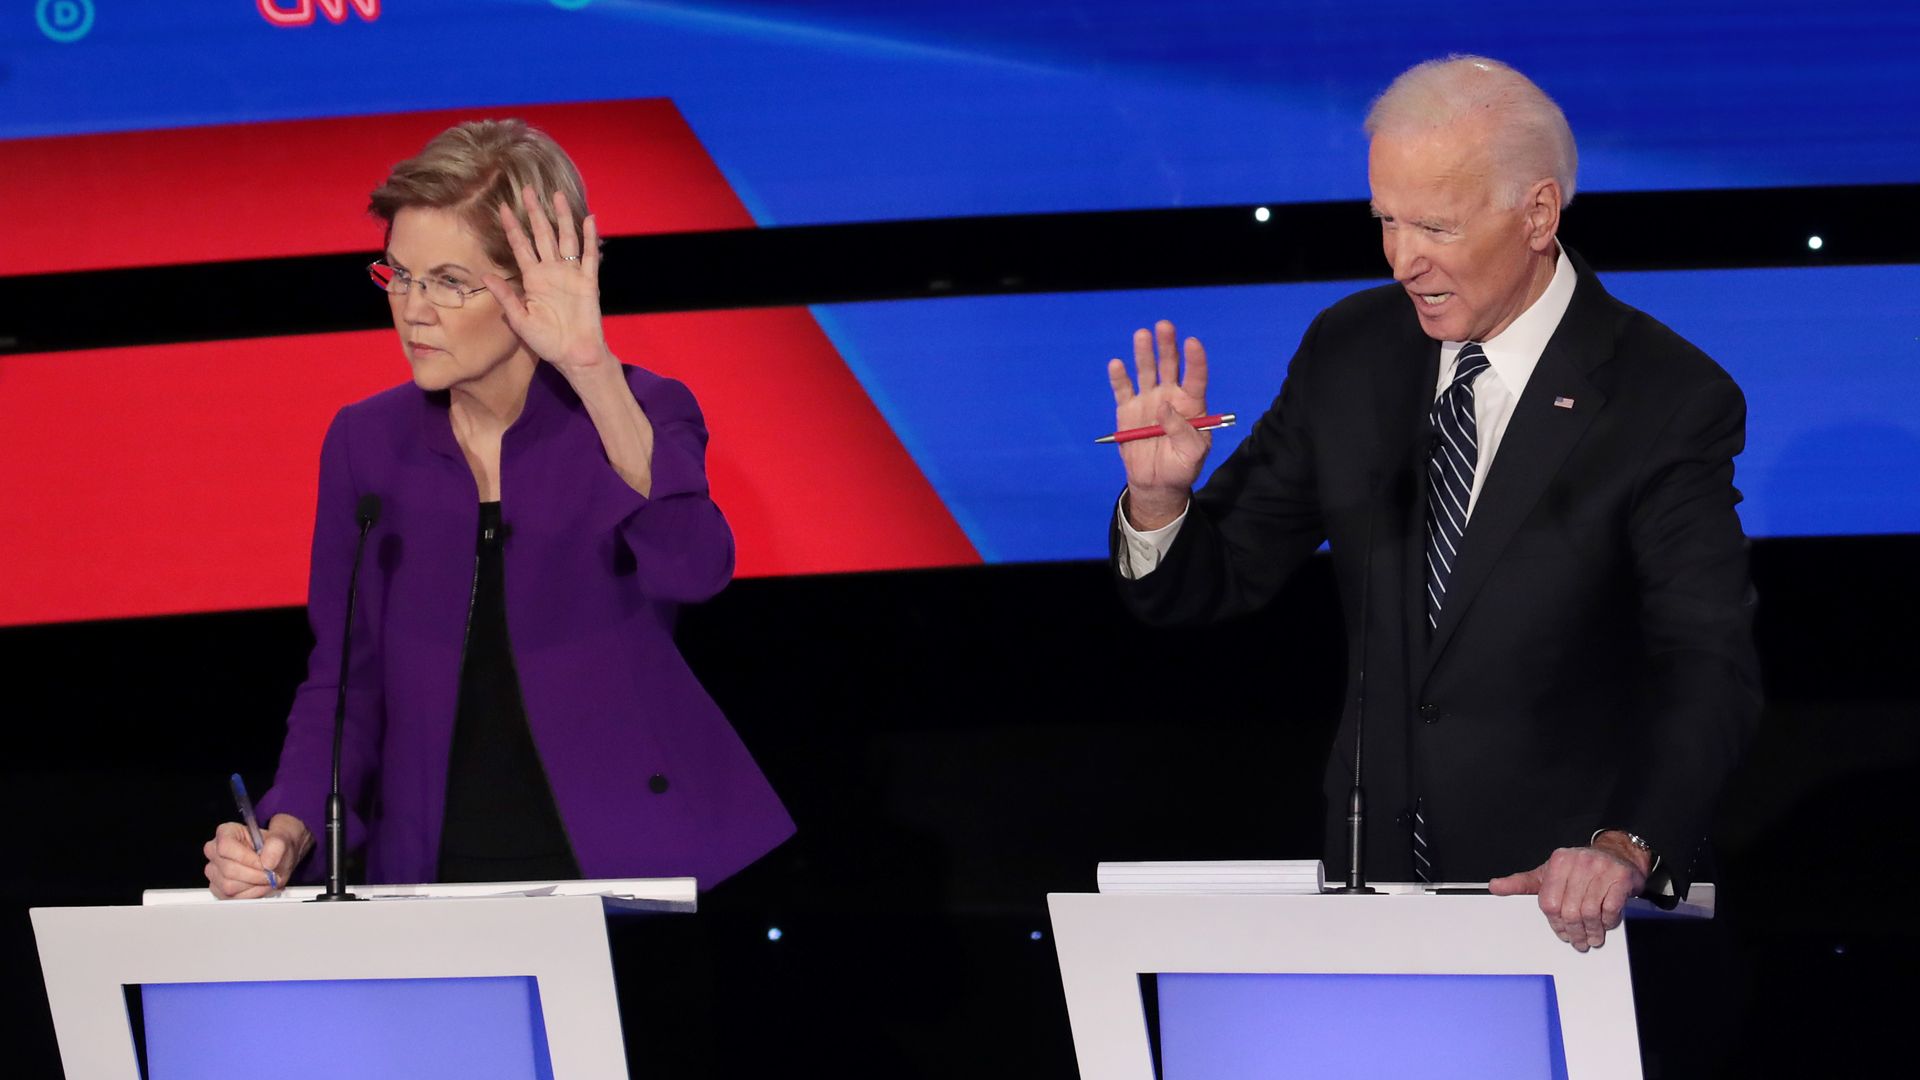 This image shows Elizabeth Warren and Joe Biden standing on the debate stage.